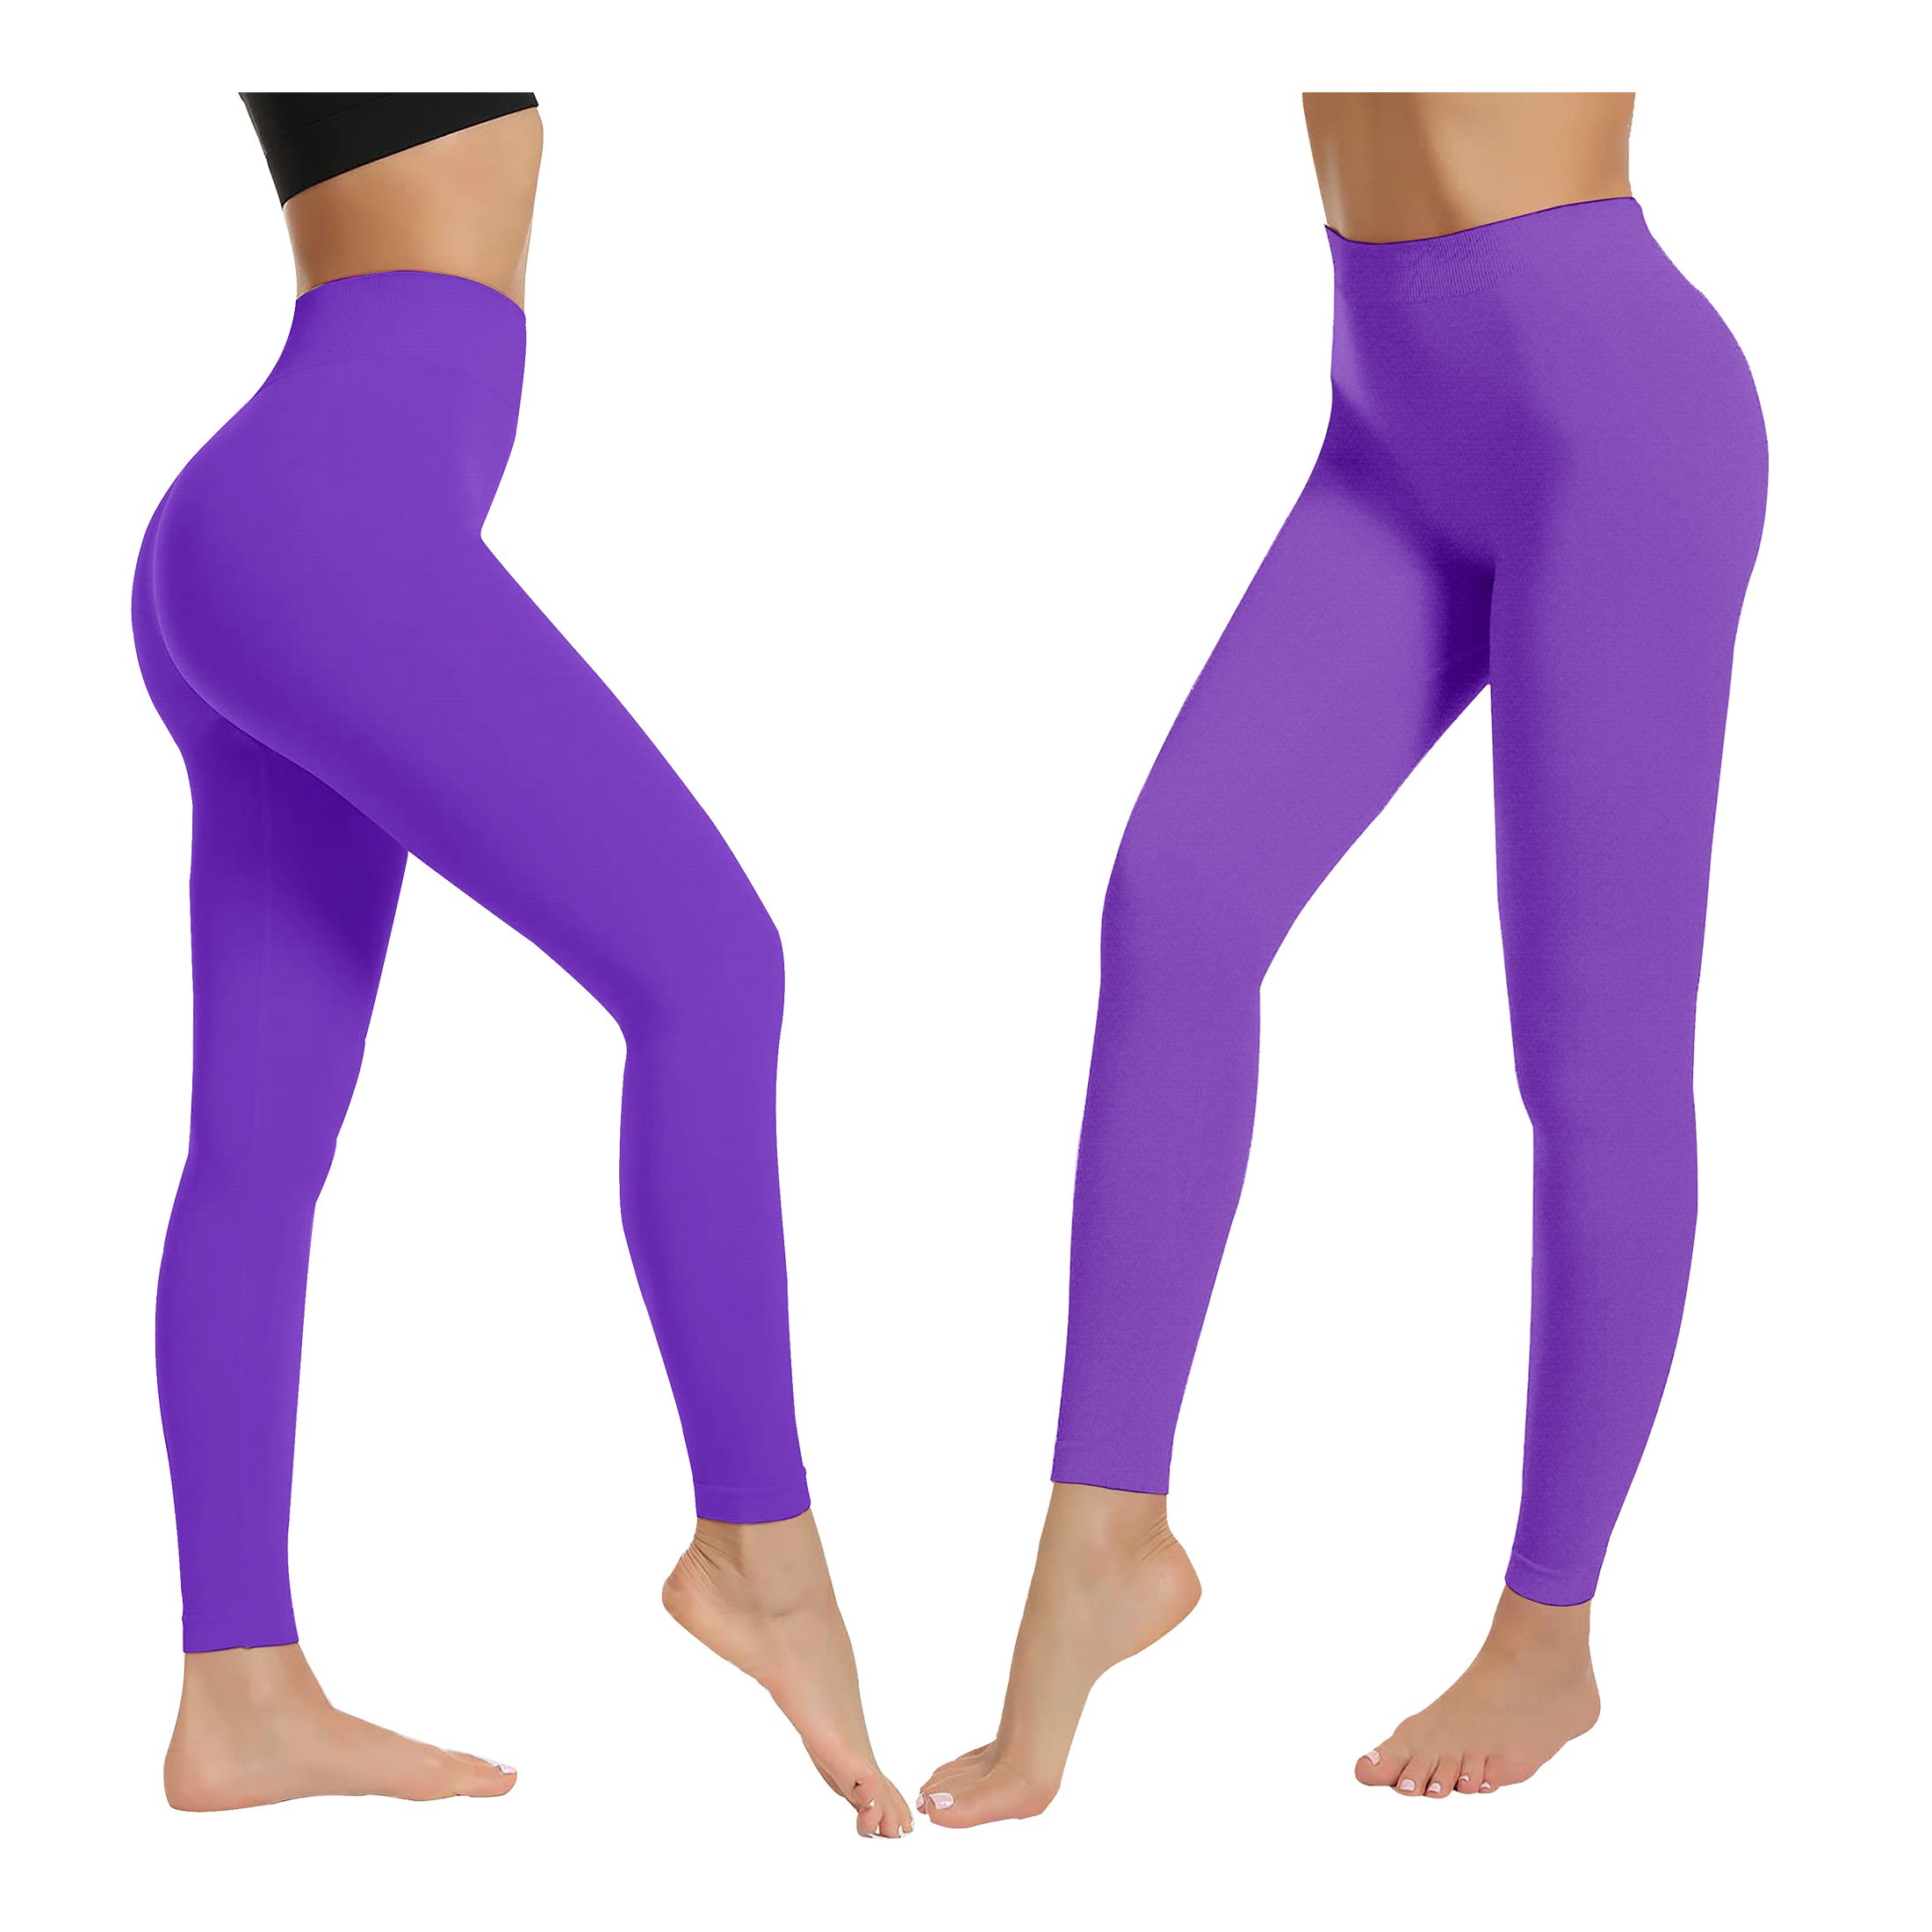 1-Pack: Women's High-Waist Ultra-Soft Stretchy Solid Fitness Yoga Leggings Pants - L